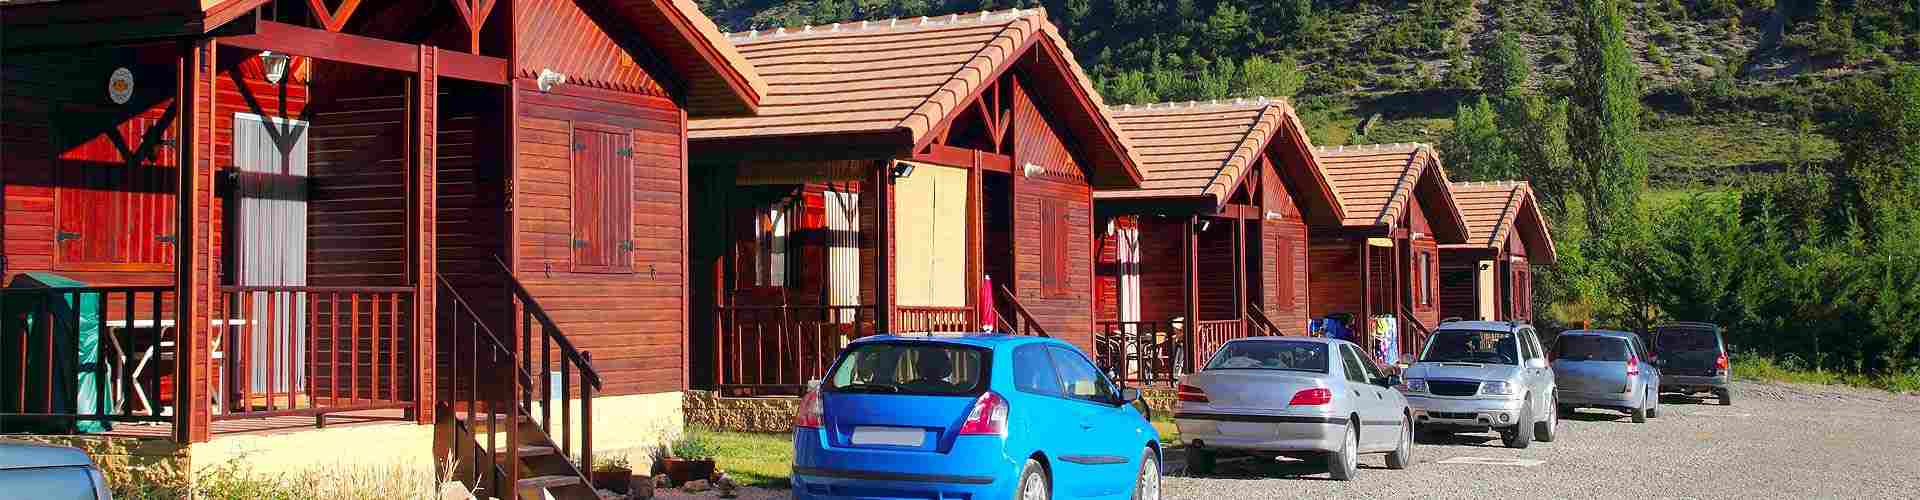 Campings y bungalows en Taradell
           
           


          
          
          


